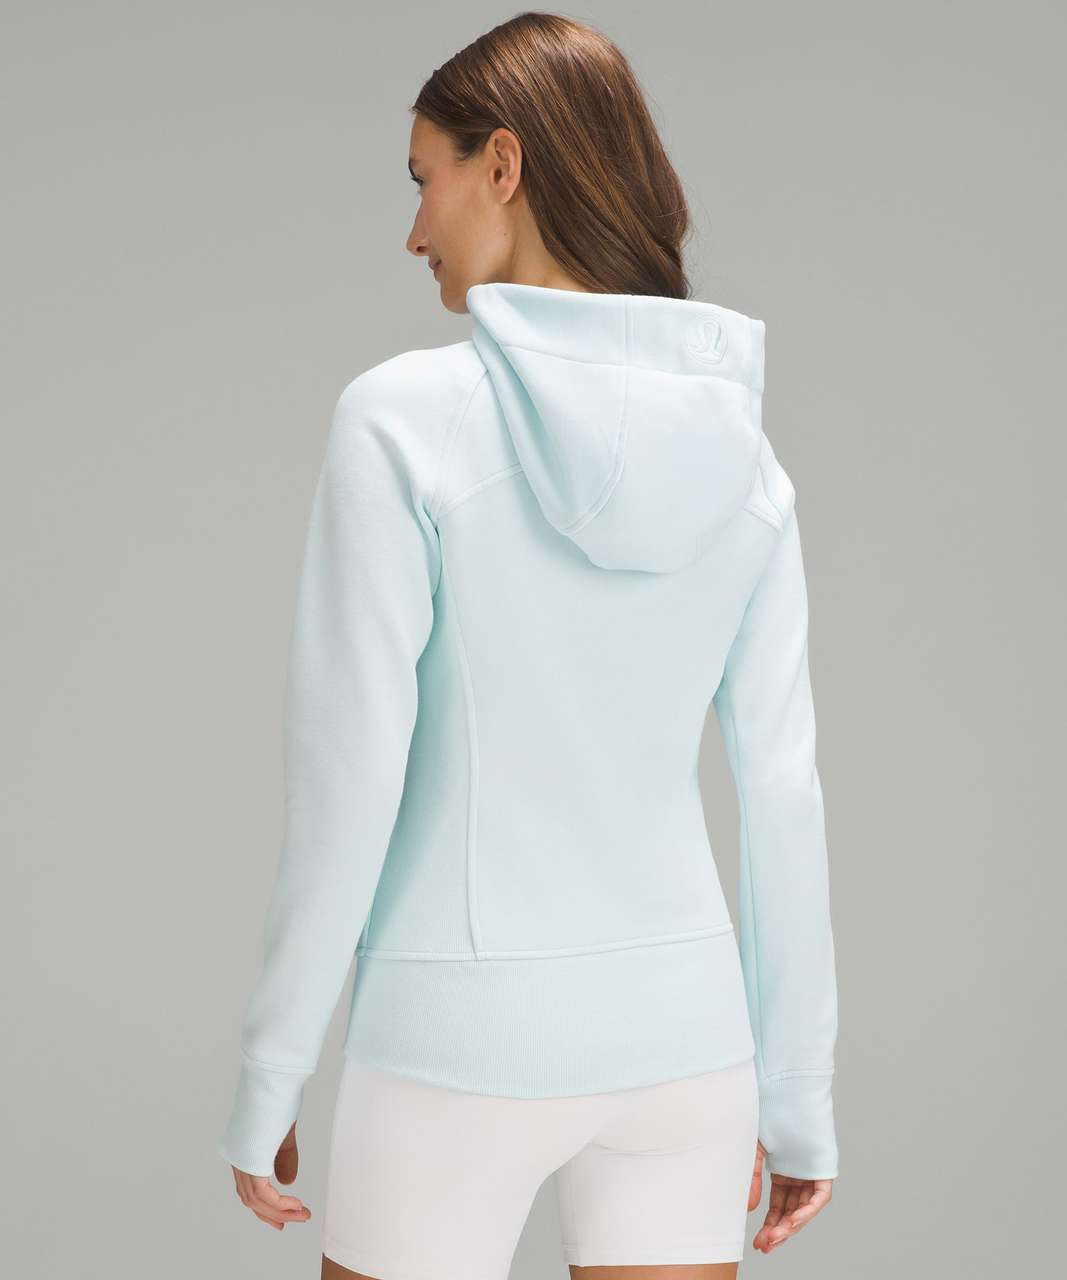 Lulu Brand Substitutes Scuba Full Zip Hoodie Yoga Shirt Lumbar